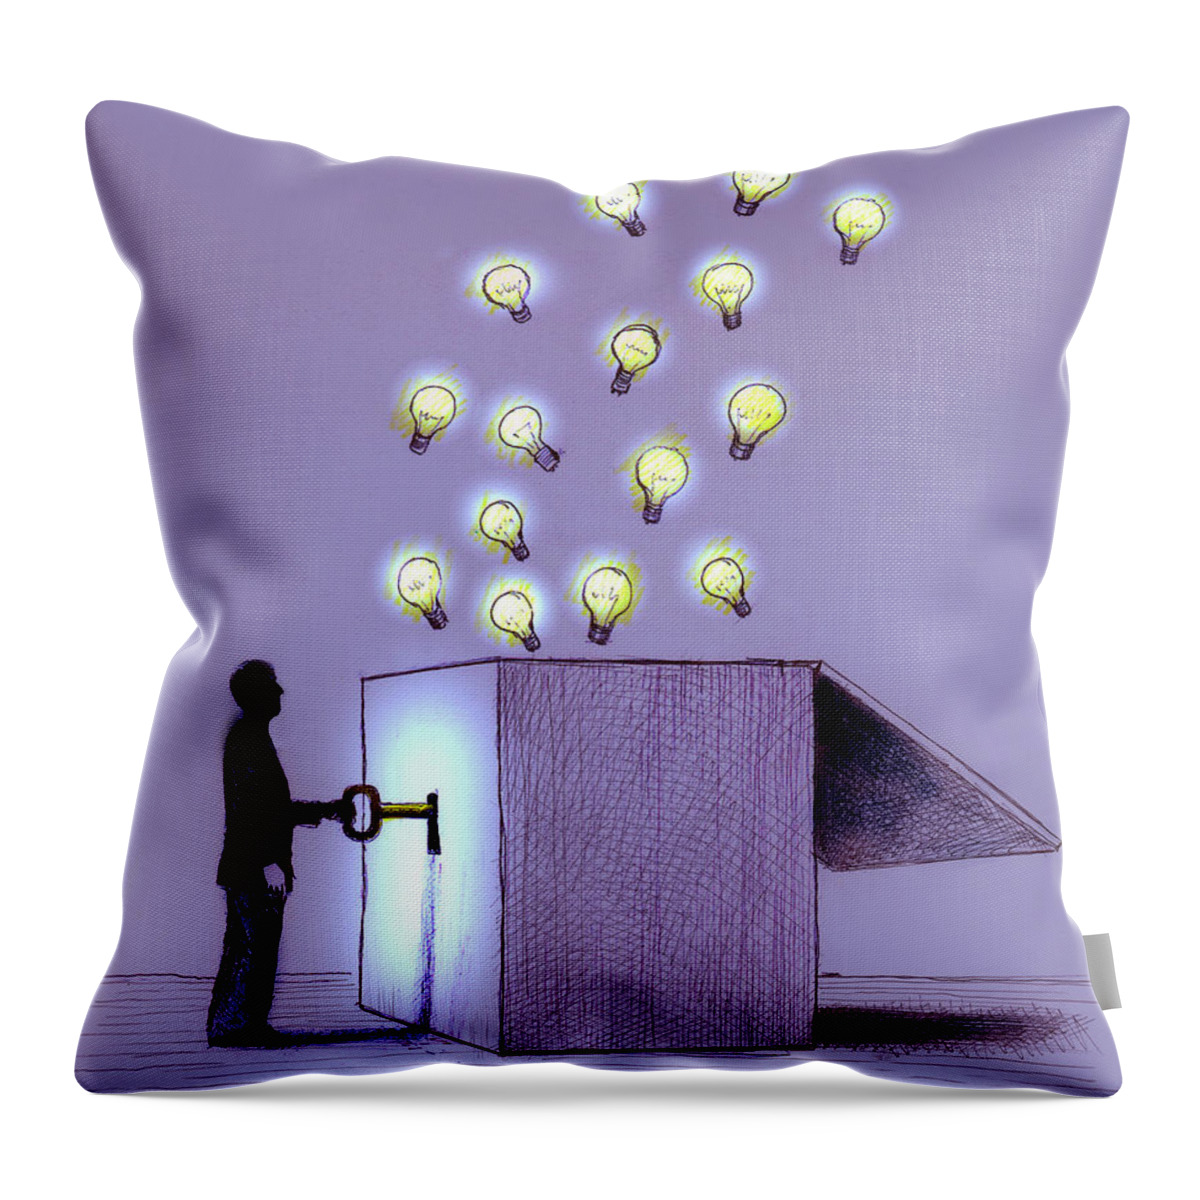 Abundance Throw Pillow featuring the photograph Man Unlocking Illuminated Light Bulbs by Ikon Ikon Images